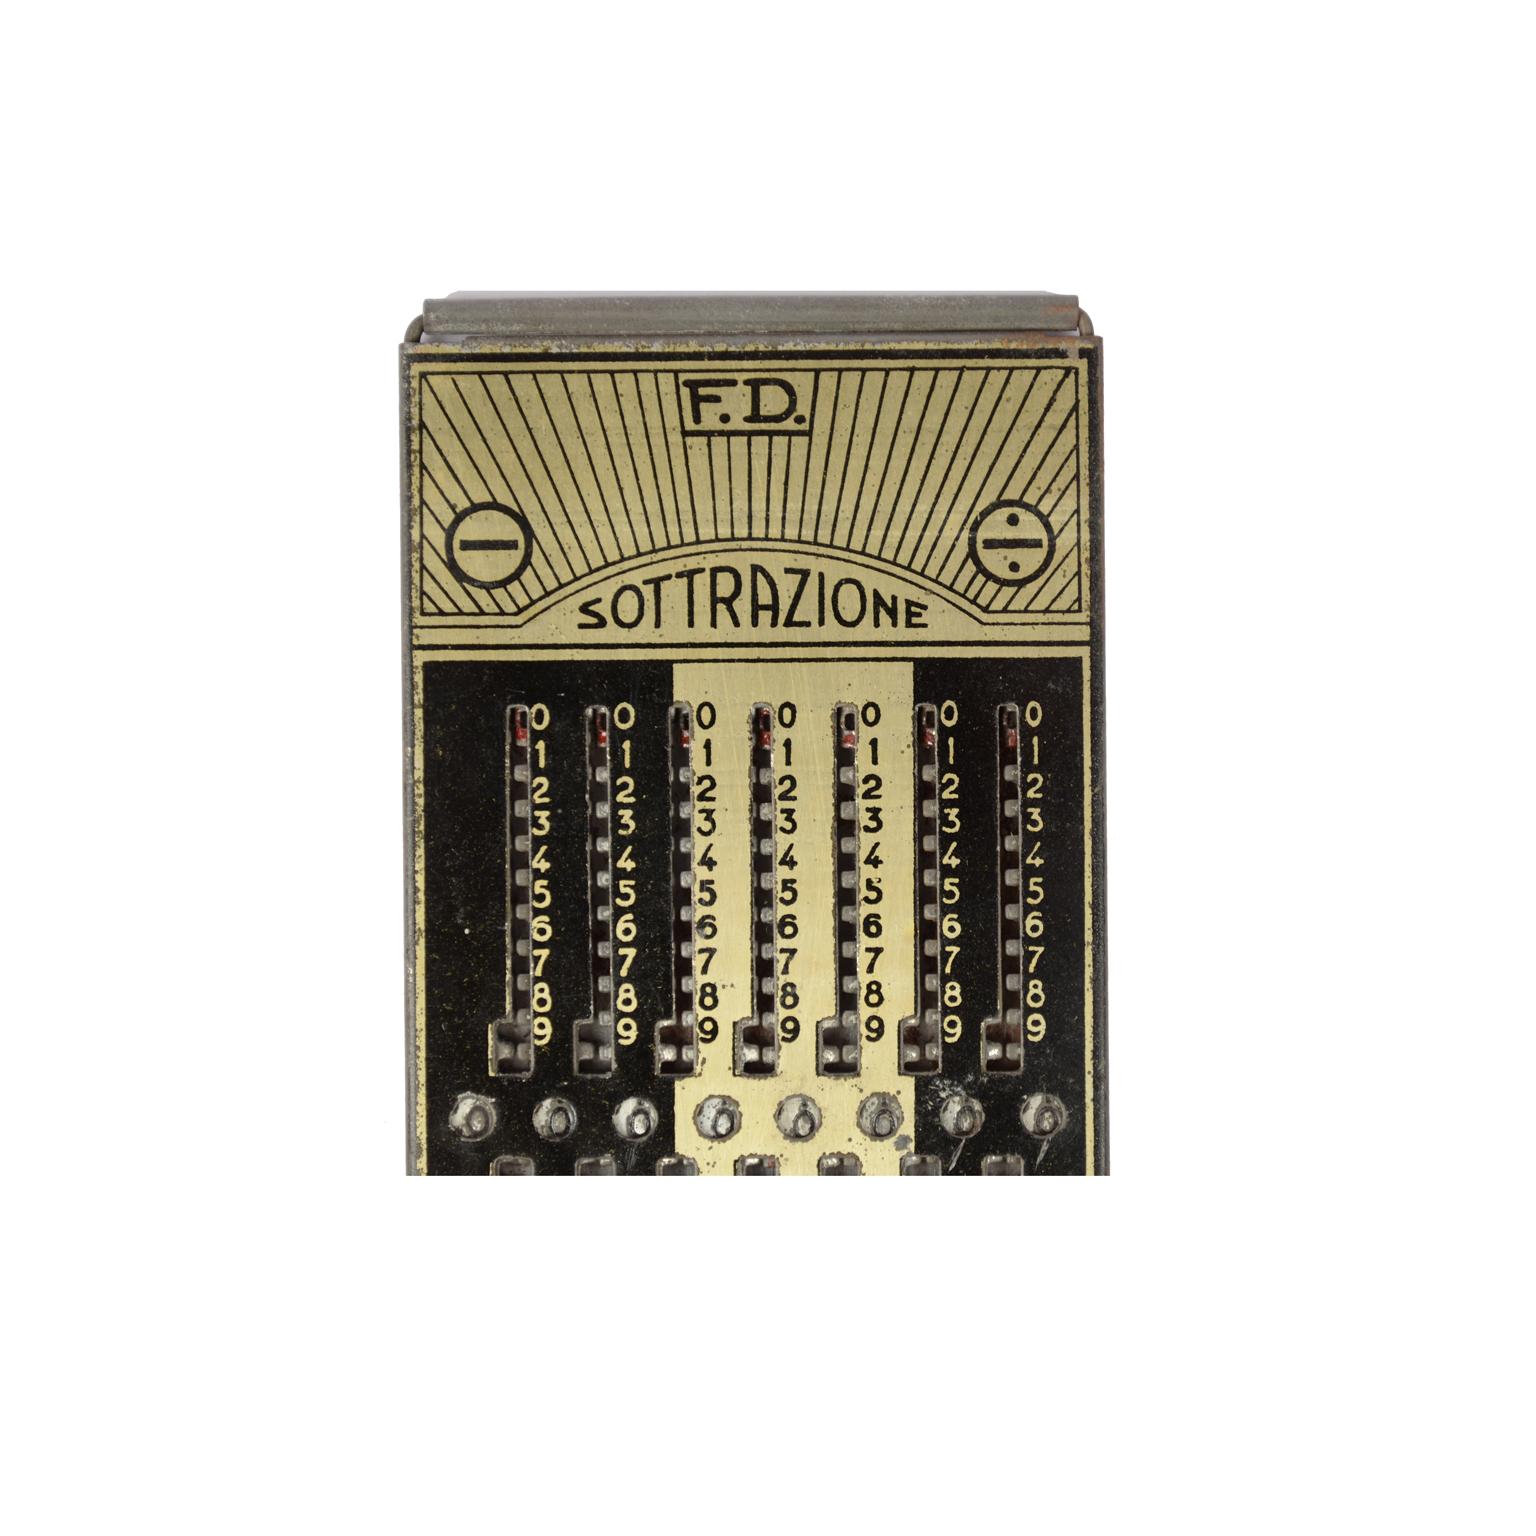 Super-Simplex Calculator Italian Manufacture of the 1920s 6